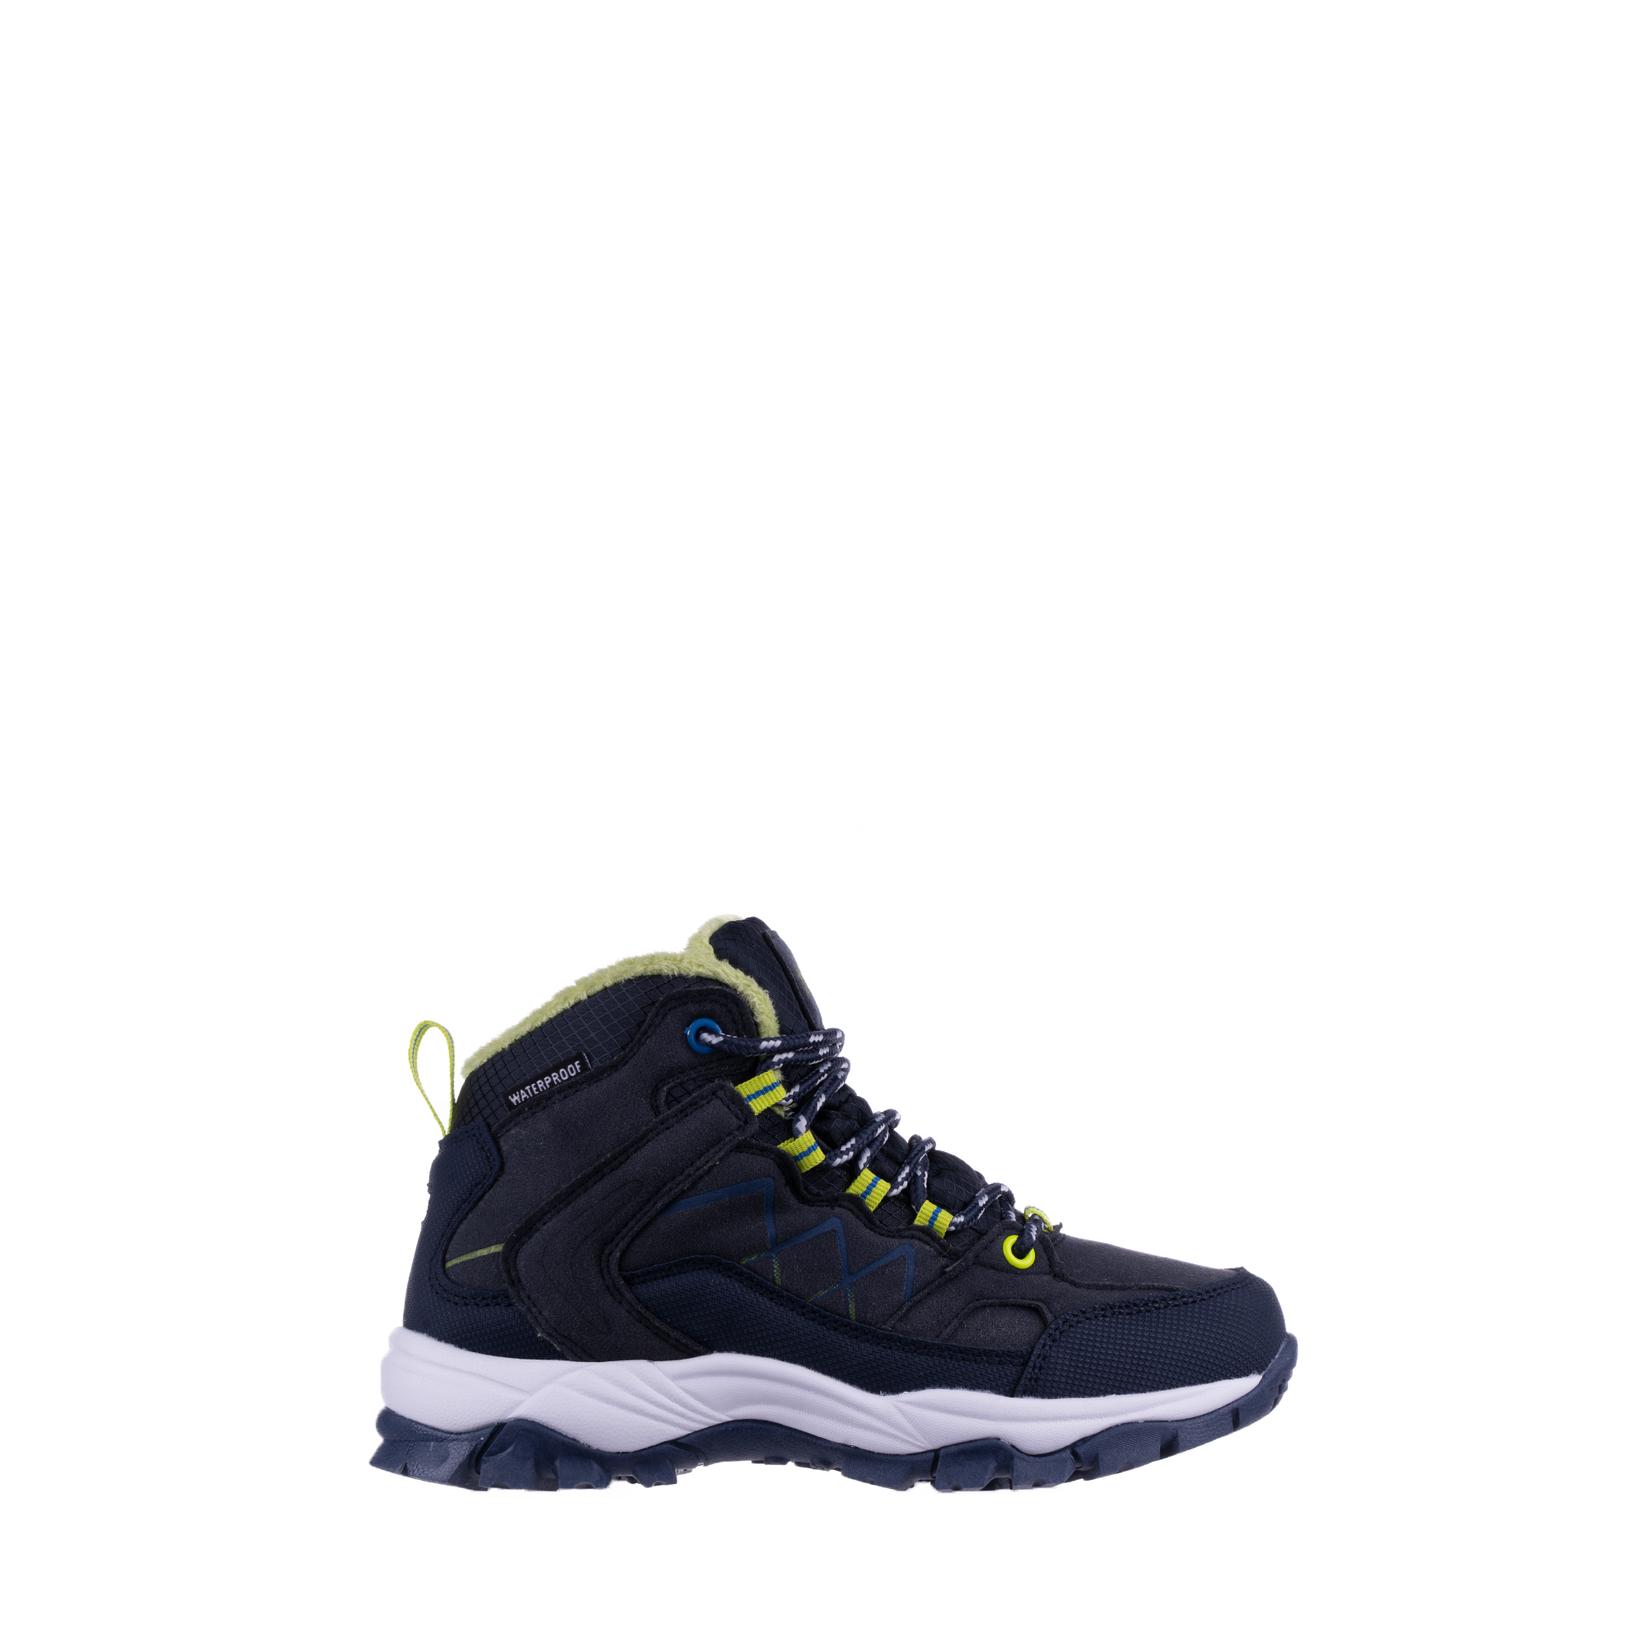 Selected image for PANDINO BOY WATERPROOF Cipele za dečake N75400, Teget